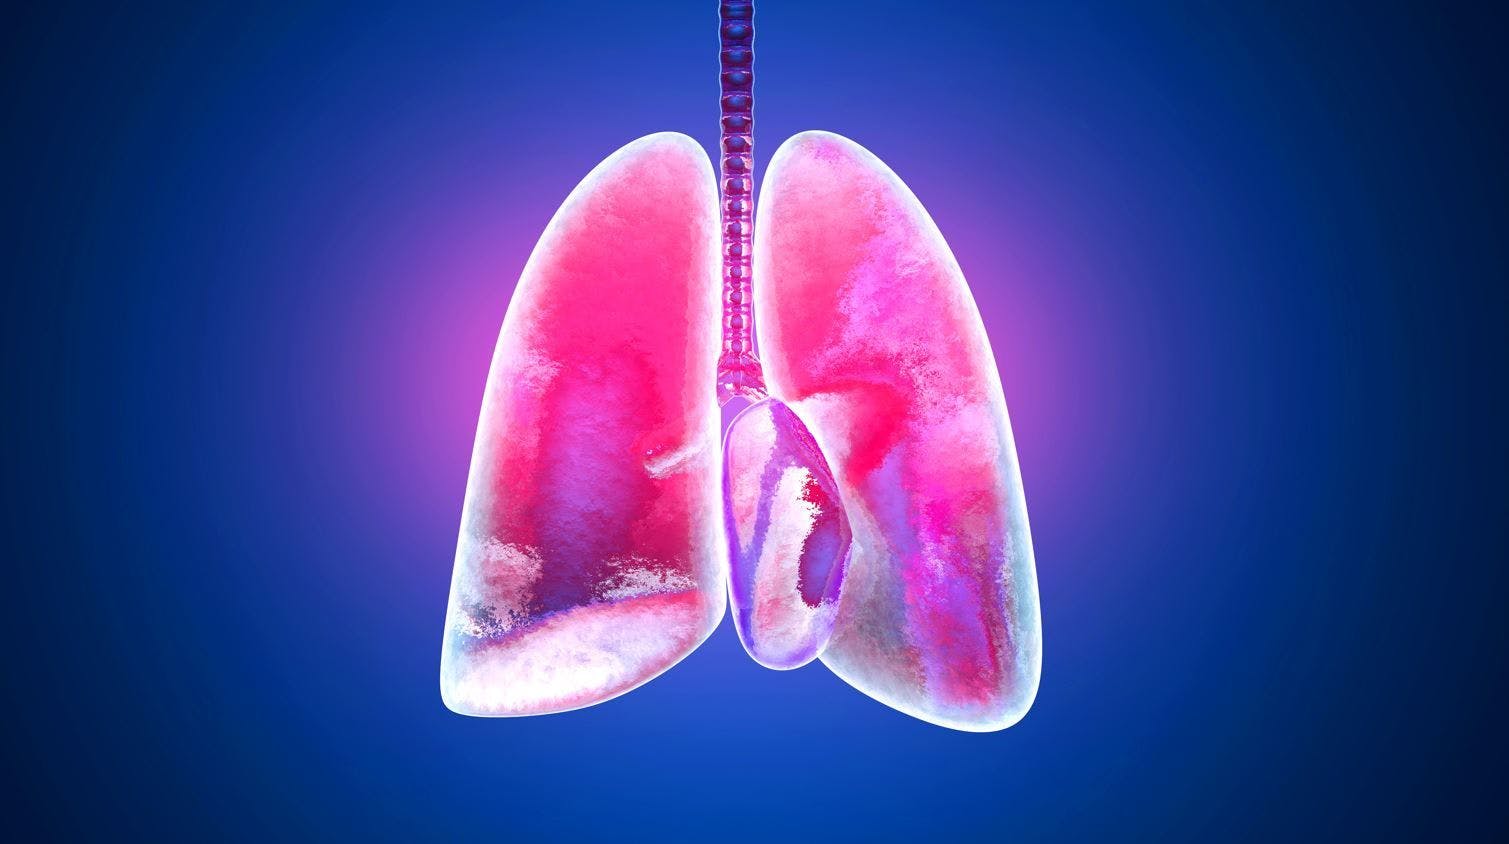 Albuterol budesonide combination reduces severe asthma exacerbations